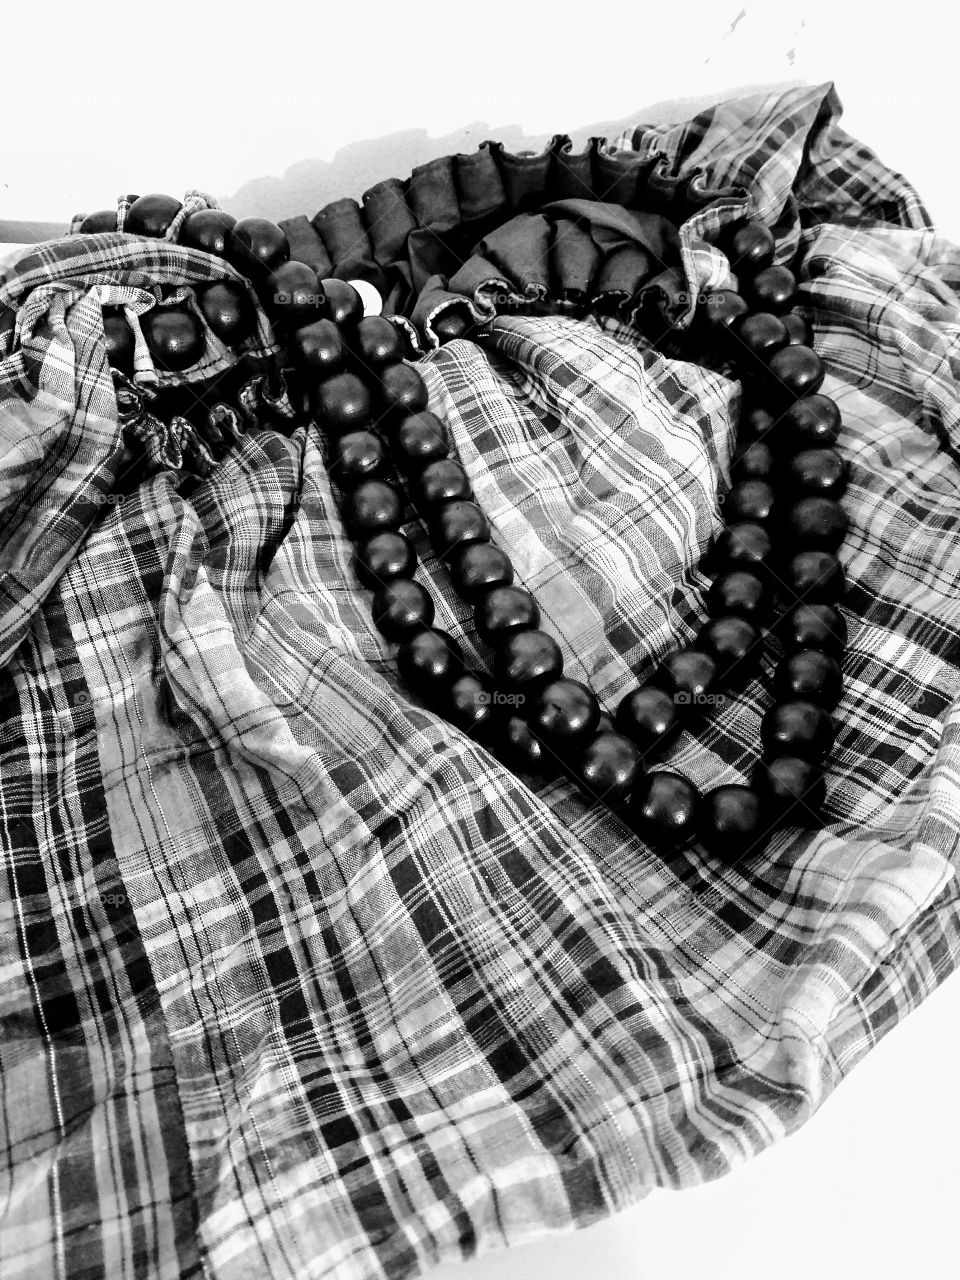 purse black and white